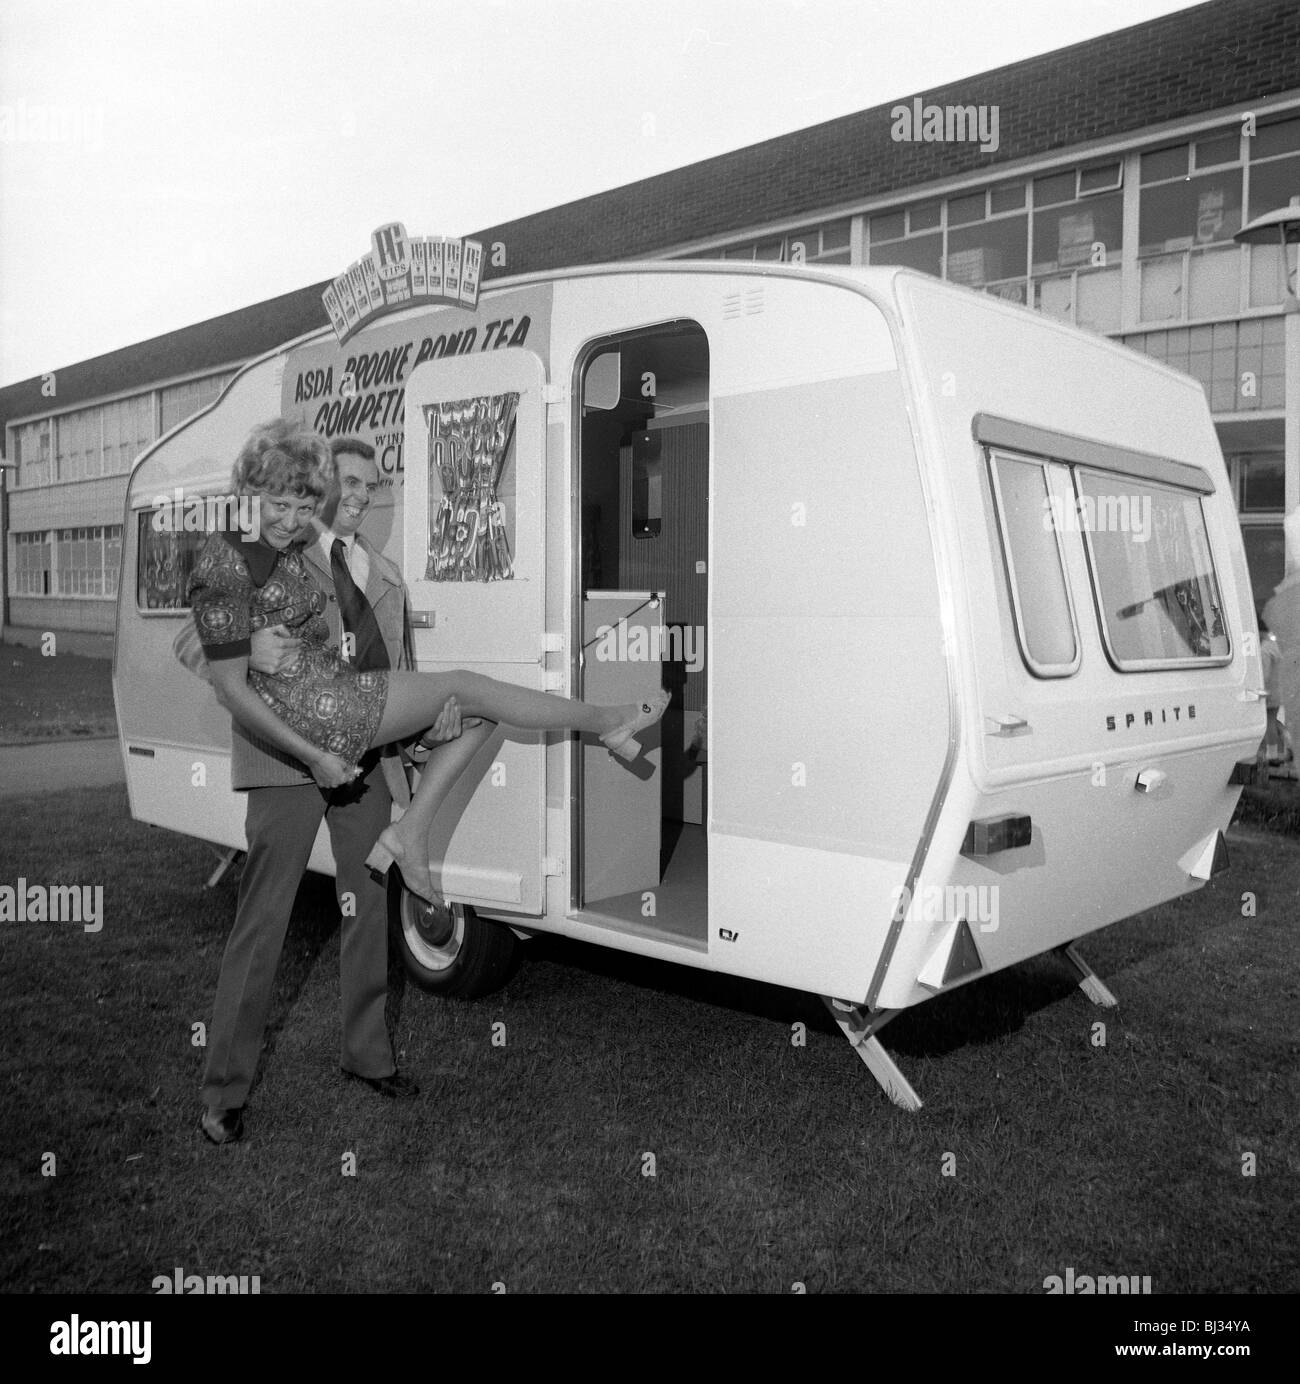 Caravan vincitori, Rotherham, South Yorkshire, 1972. Artista: Michael Walters Foto Stock